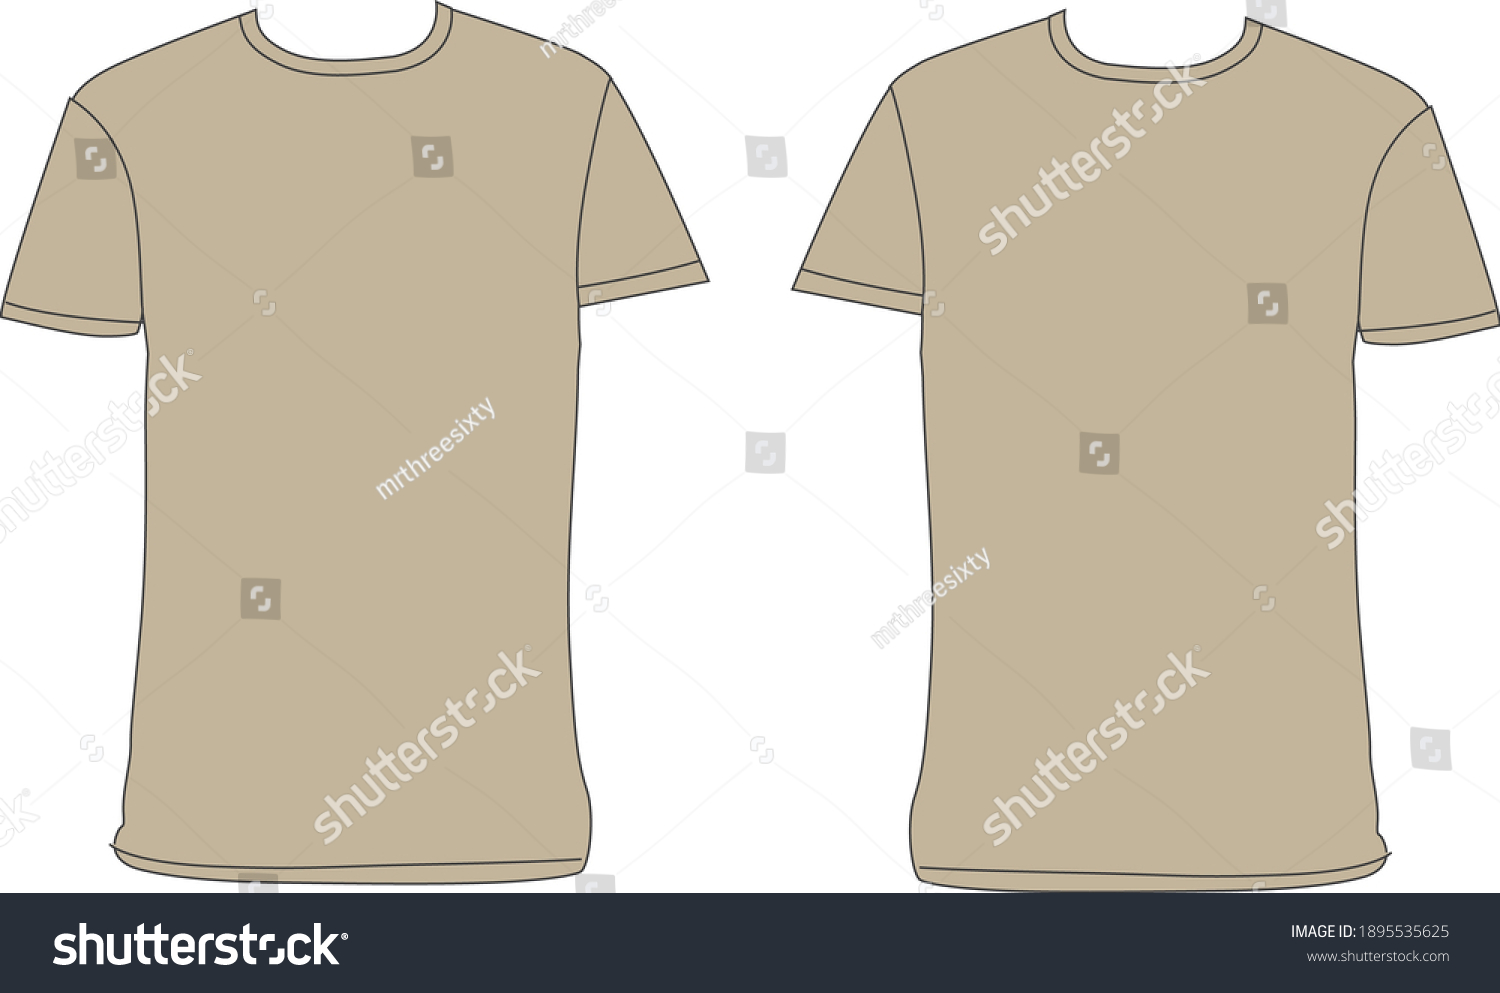 Blank Tshirt Mockup Vactor Template Clothing Stock Vector (Royalty Free ...